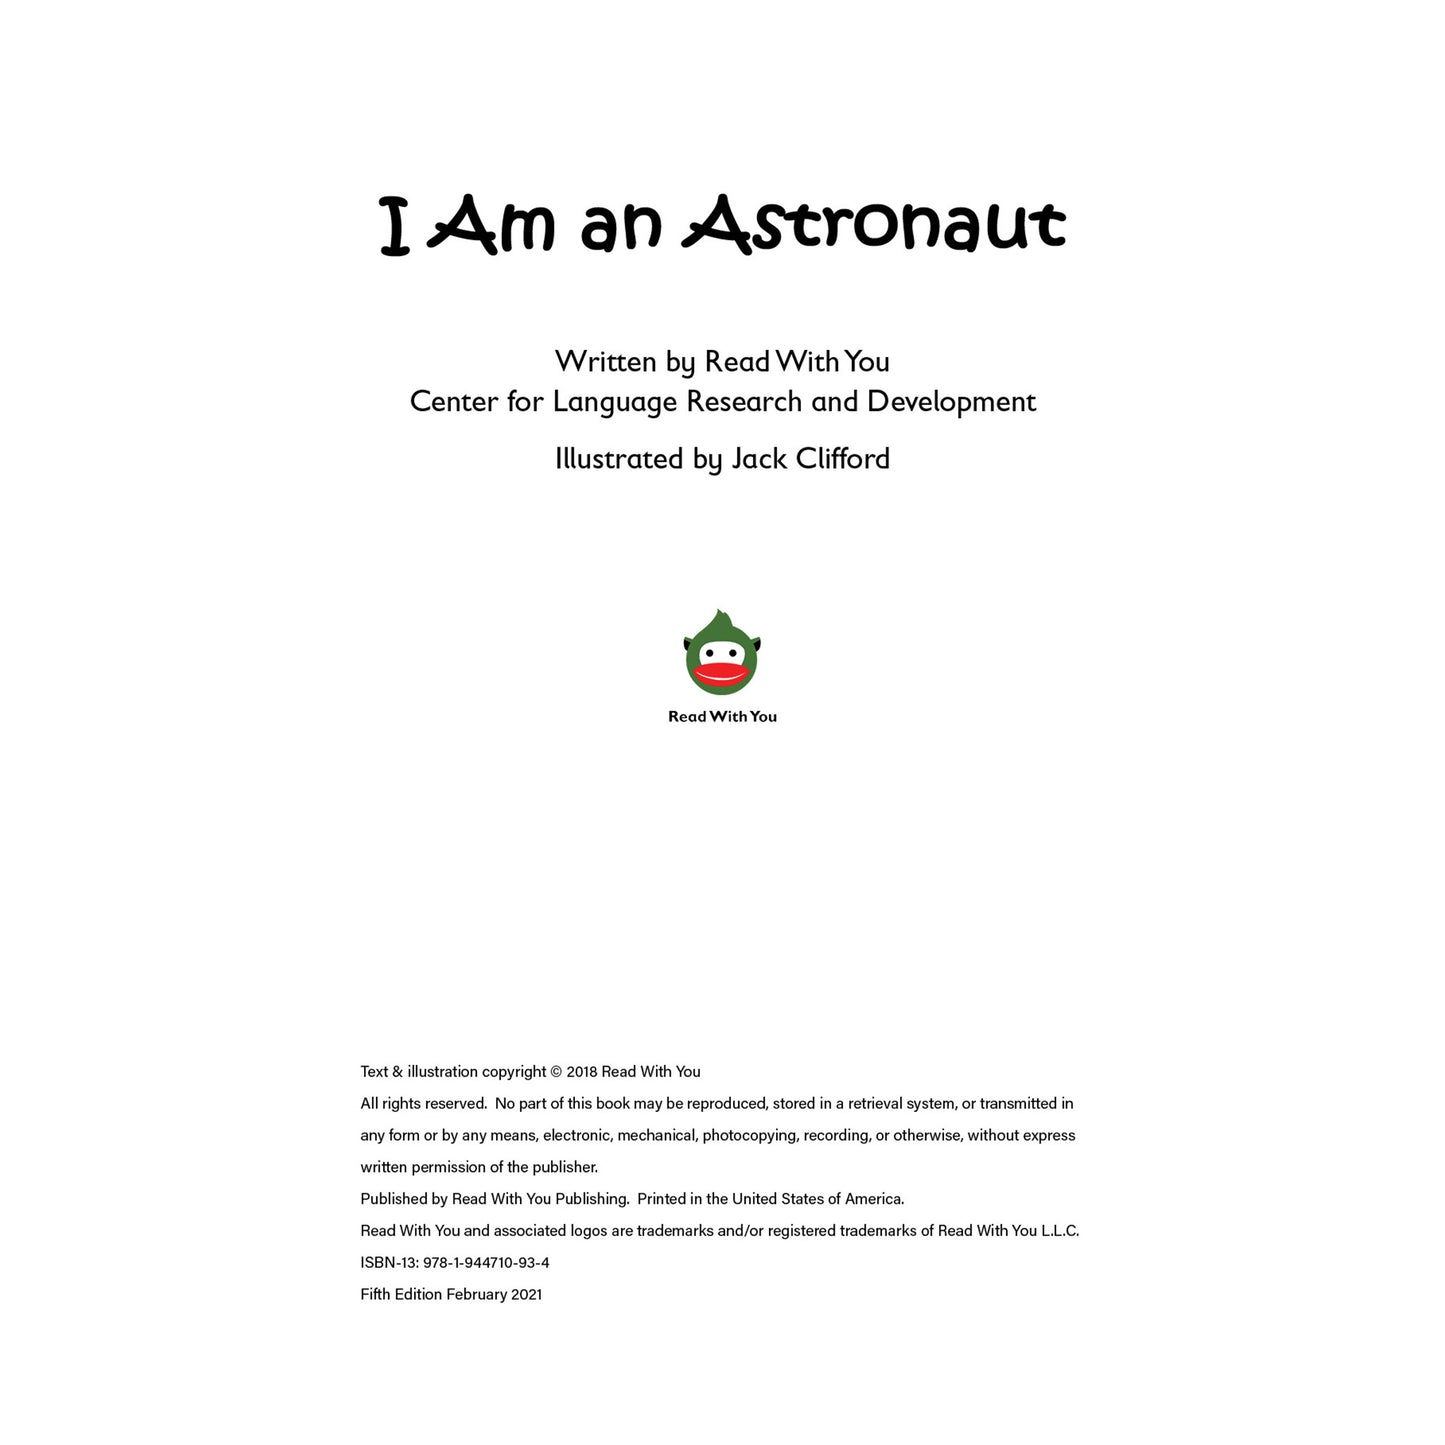 I am an Astronaut